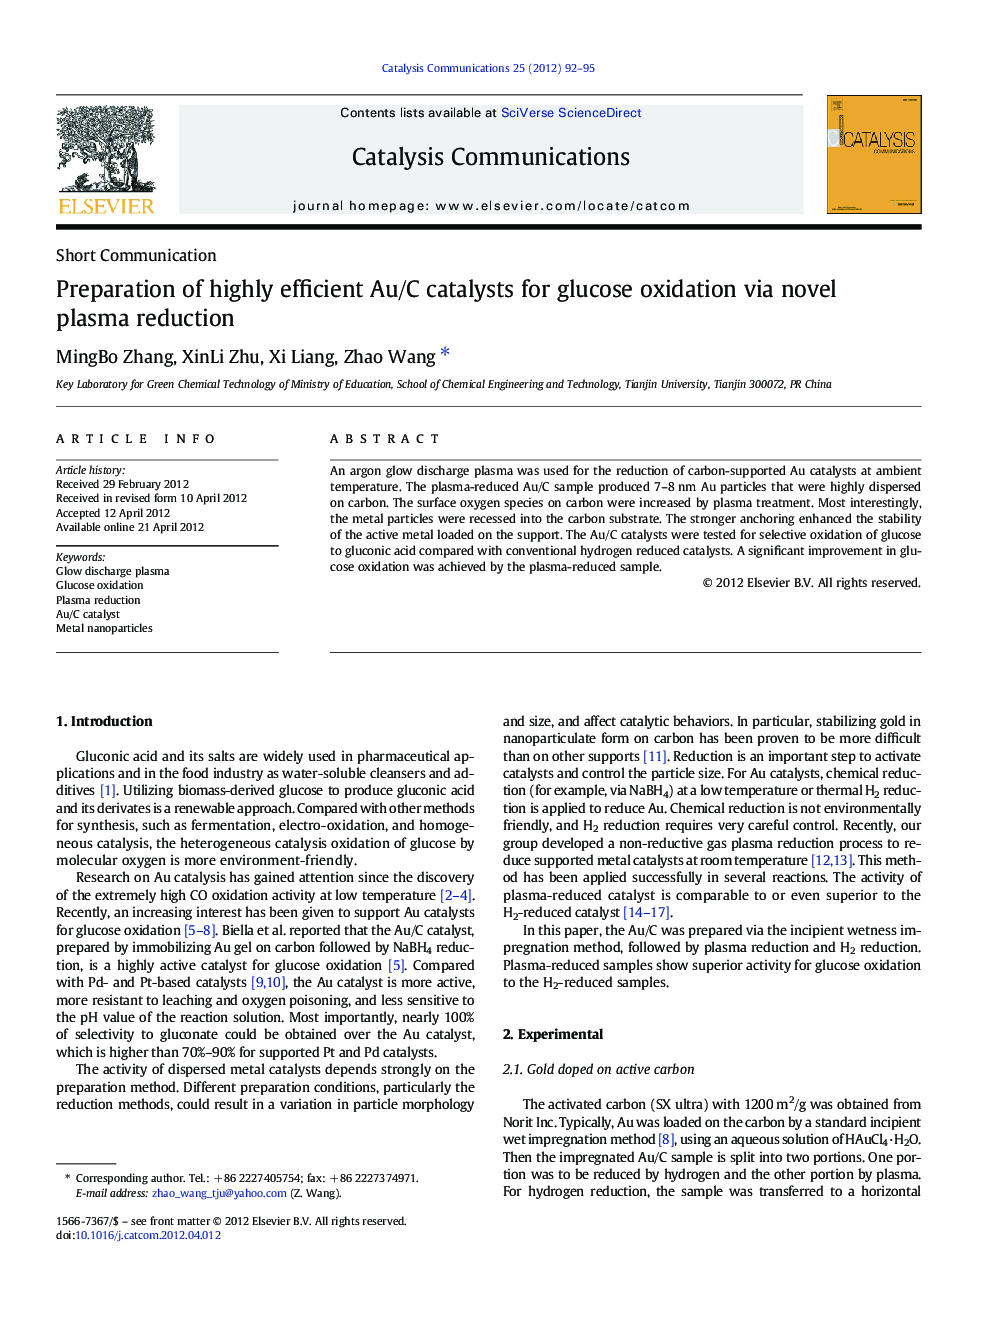 Preparation of highly efficient Au/C catalysts for glucose oxidation via novel plasma reduction